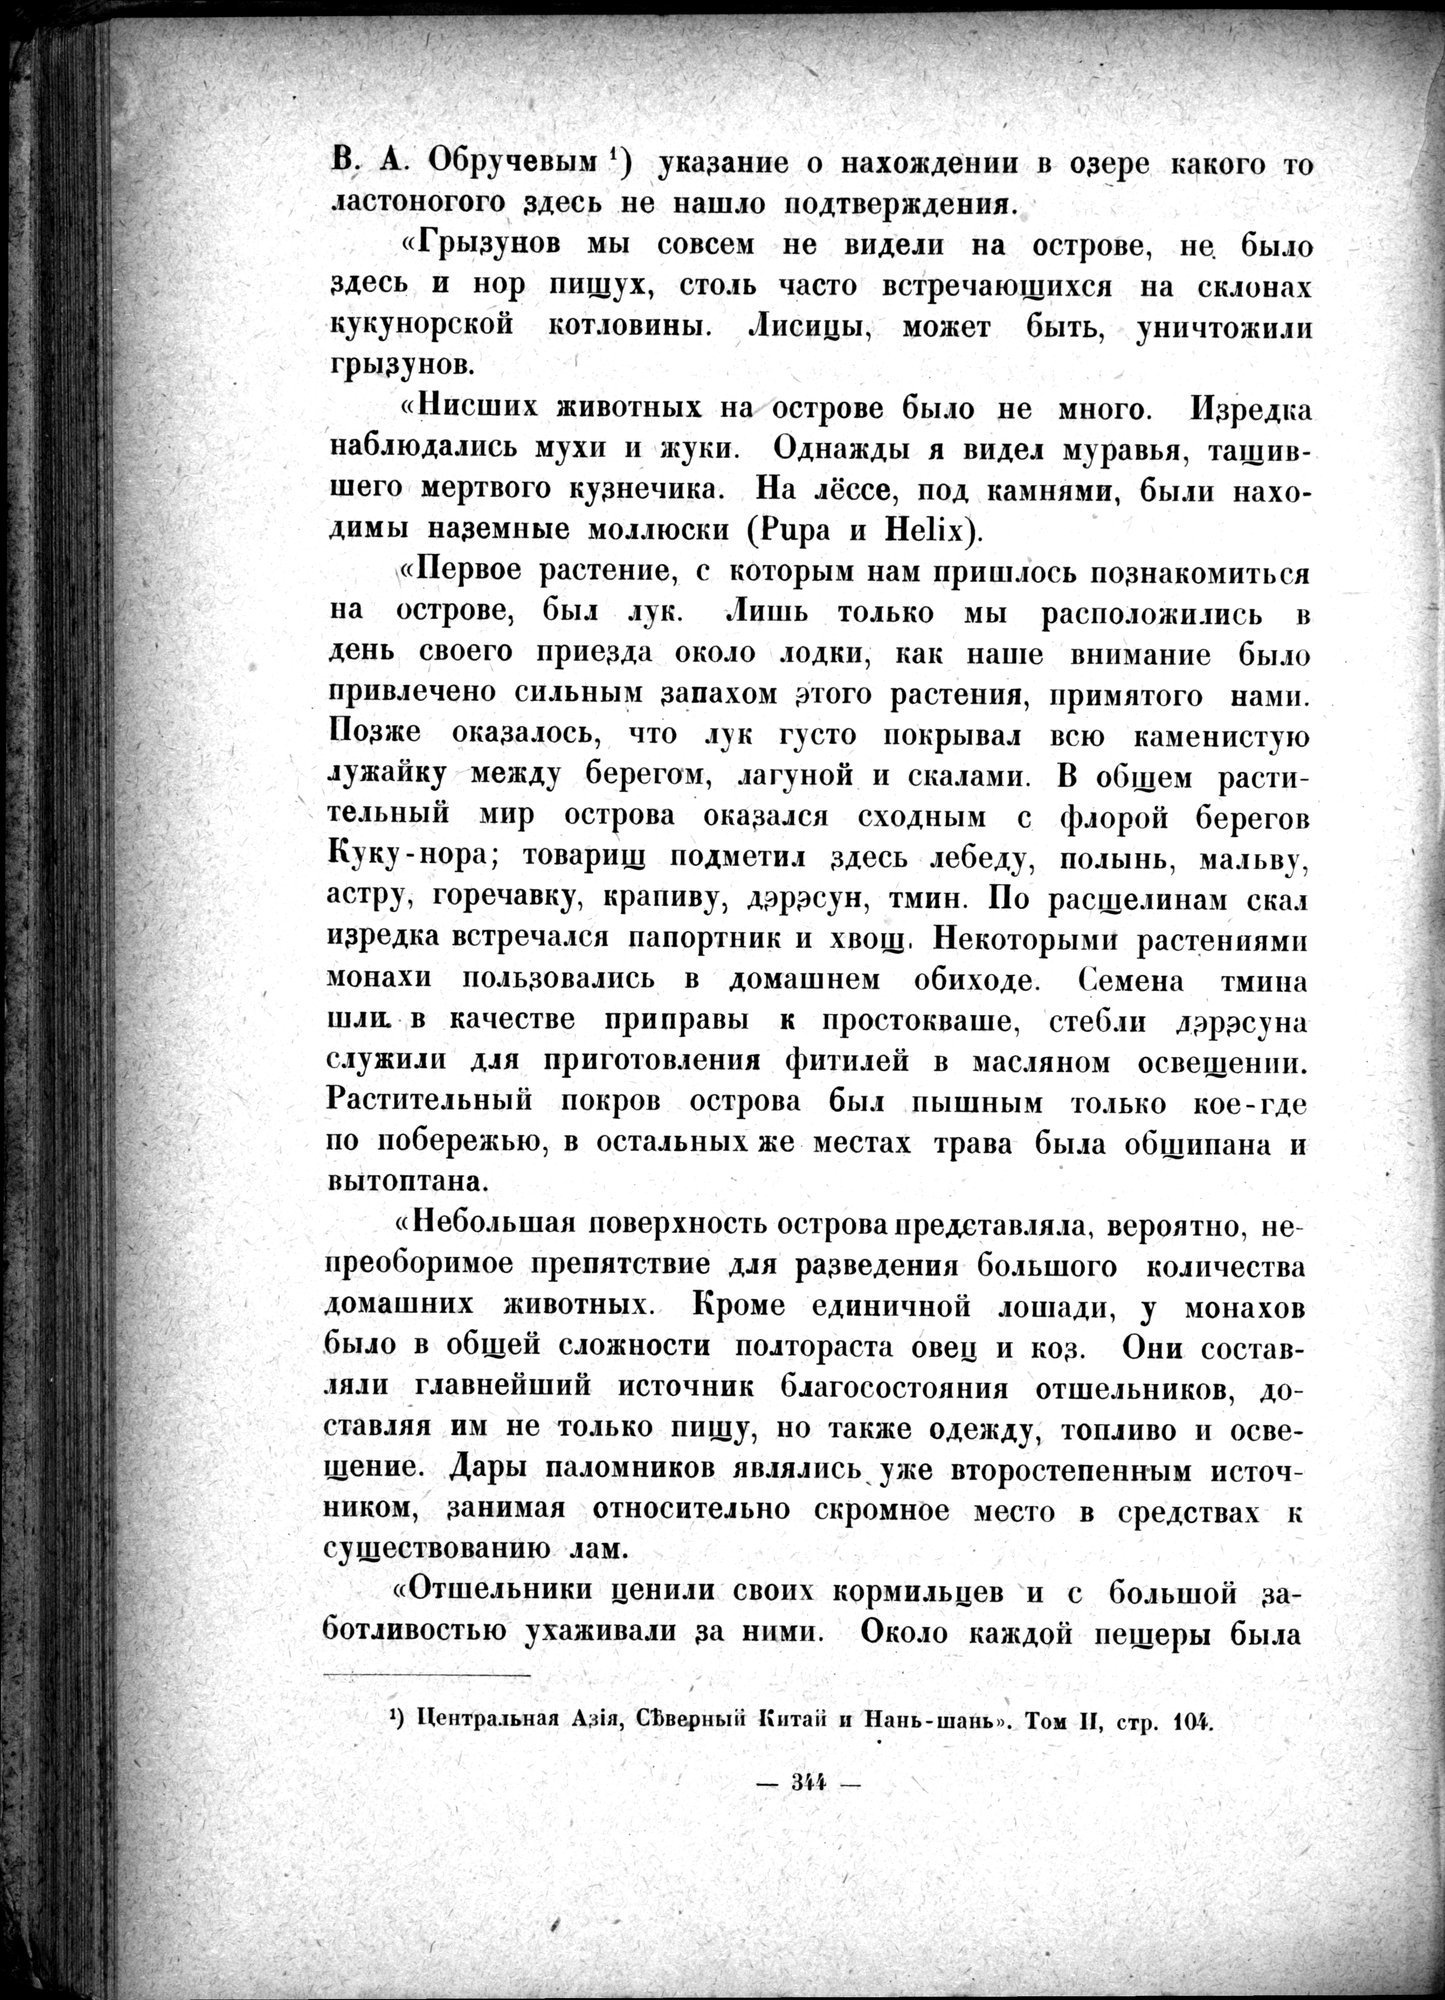 Mongoliya i Amdo i mertby gorod Khara-Khoto : vol.1 / Page 394 (Grayscale High Resolution Image)